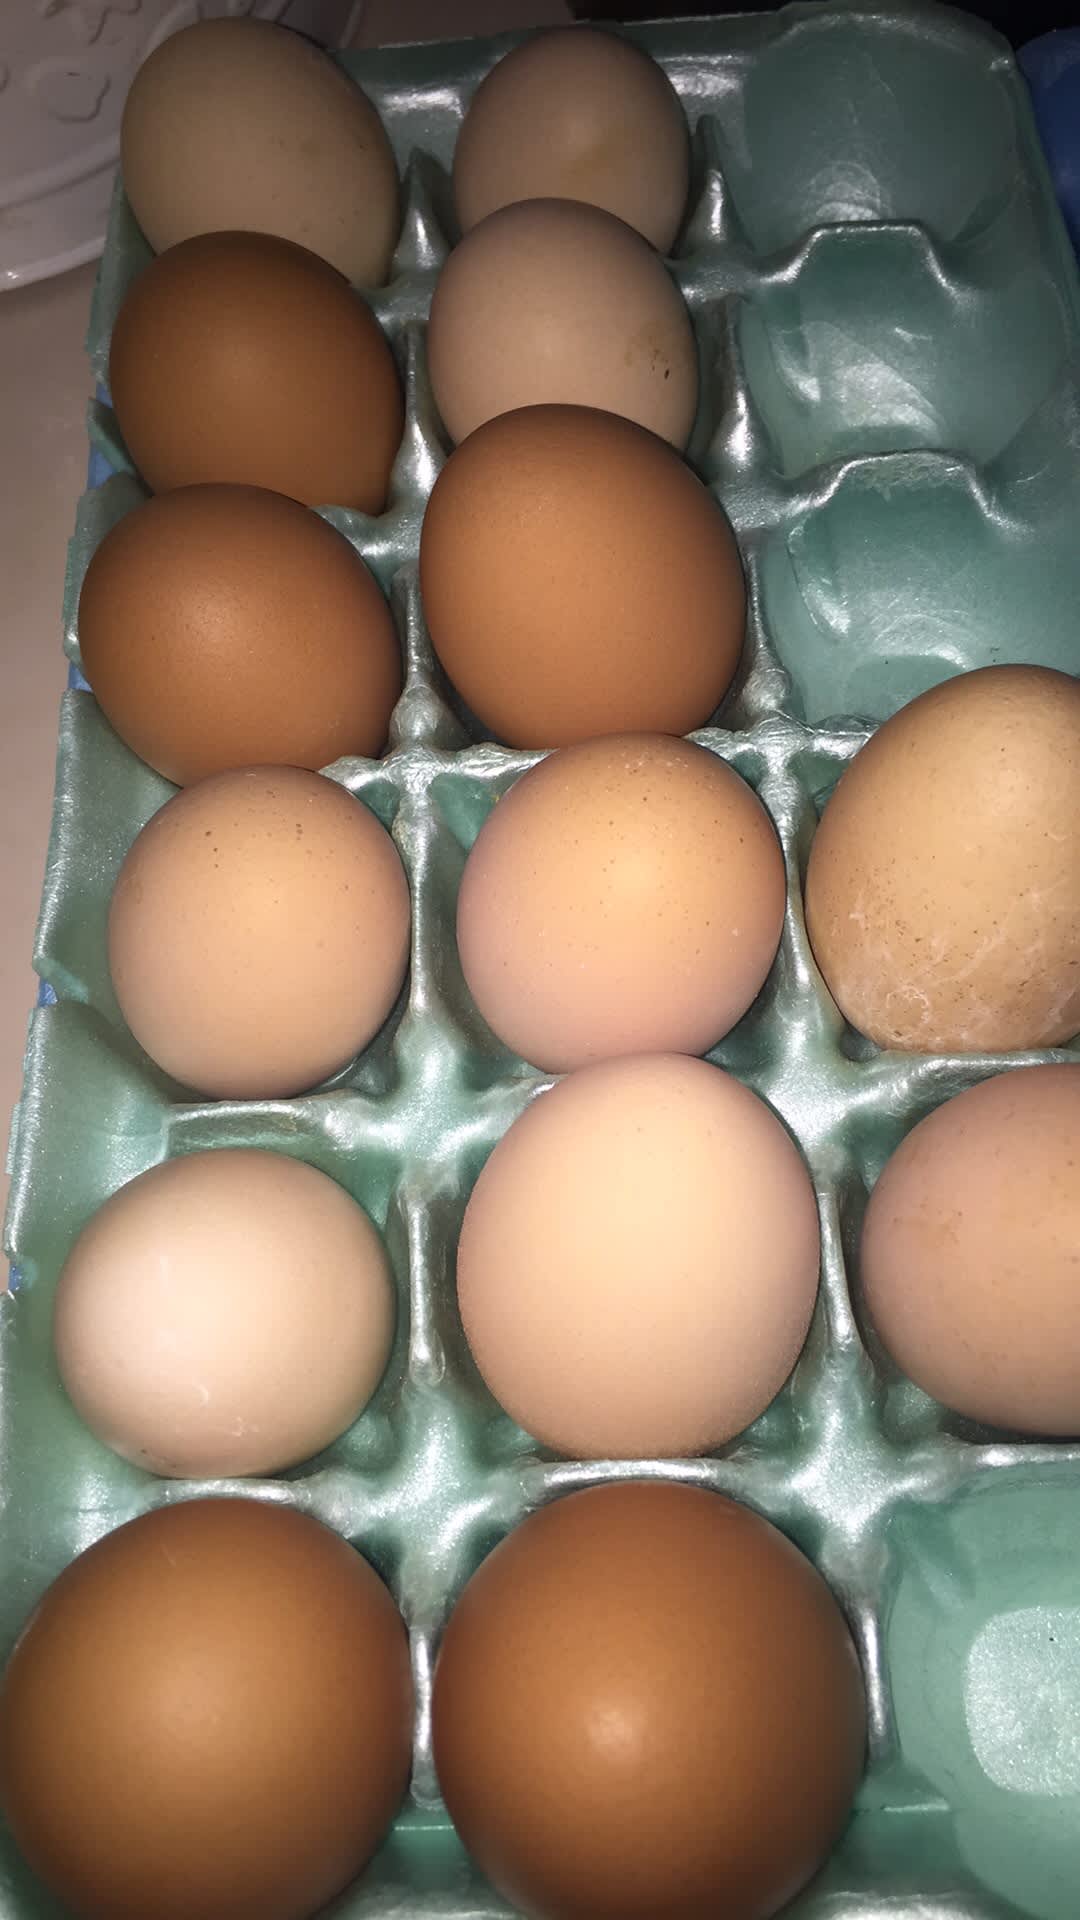 Free-free range eggs